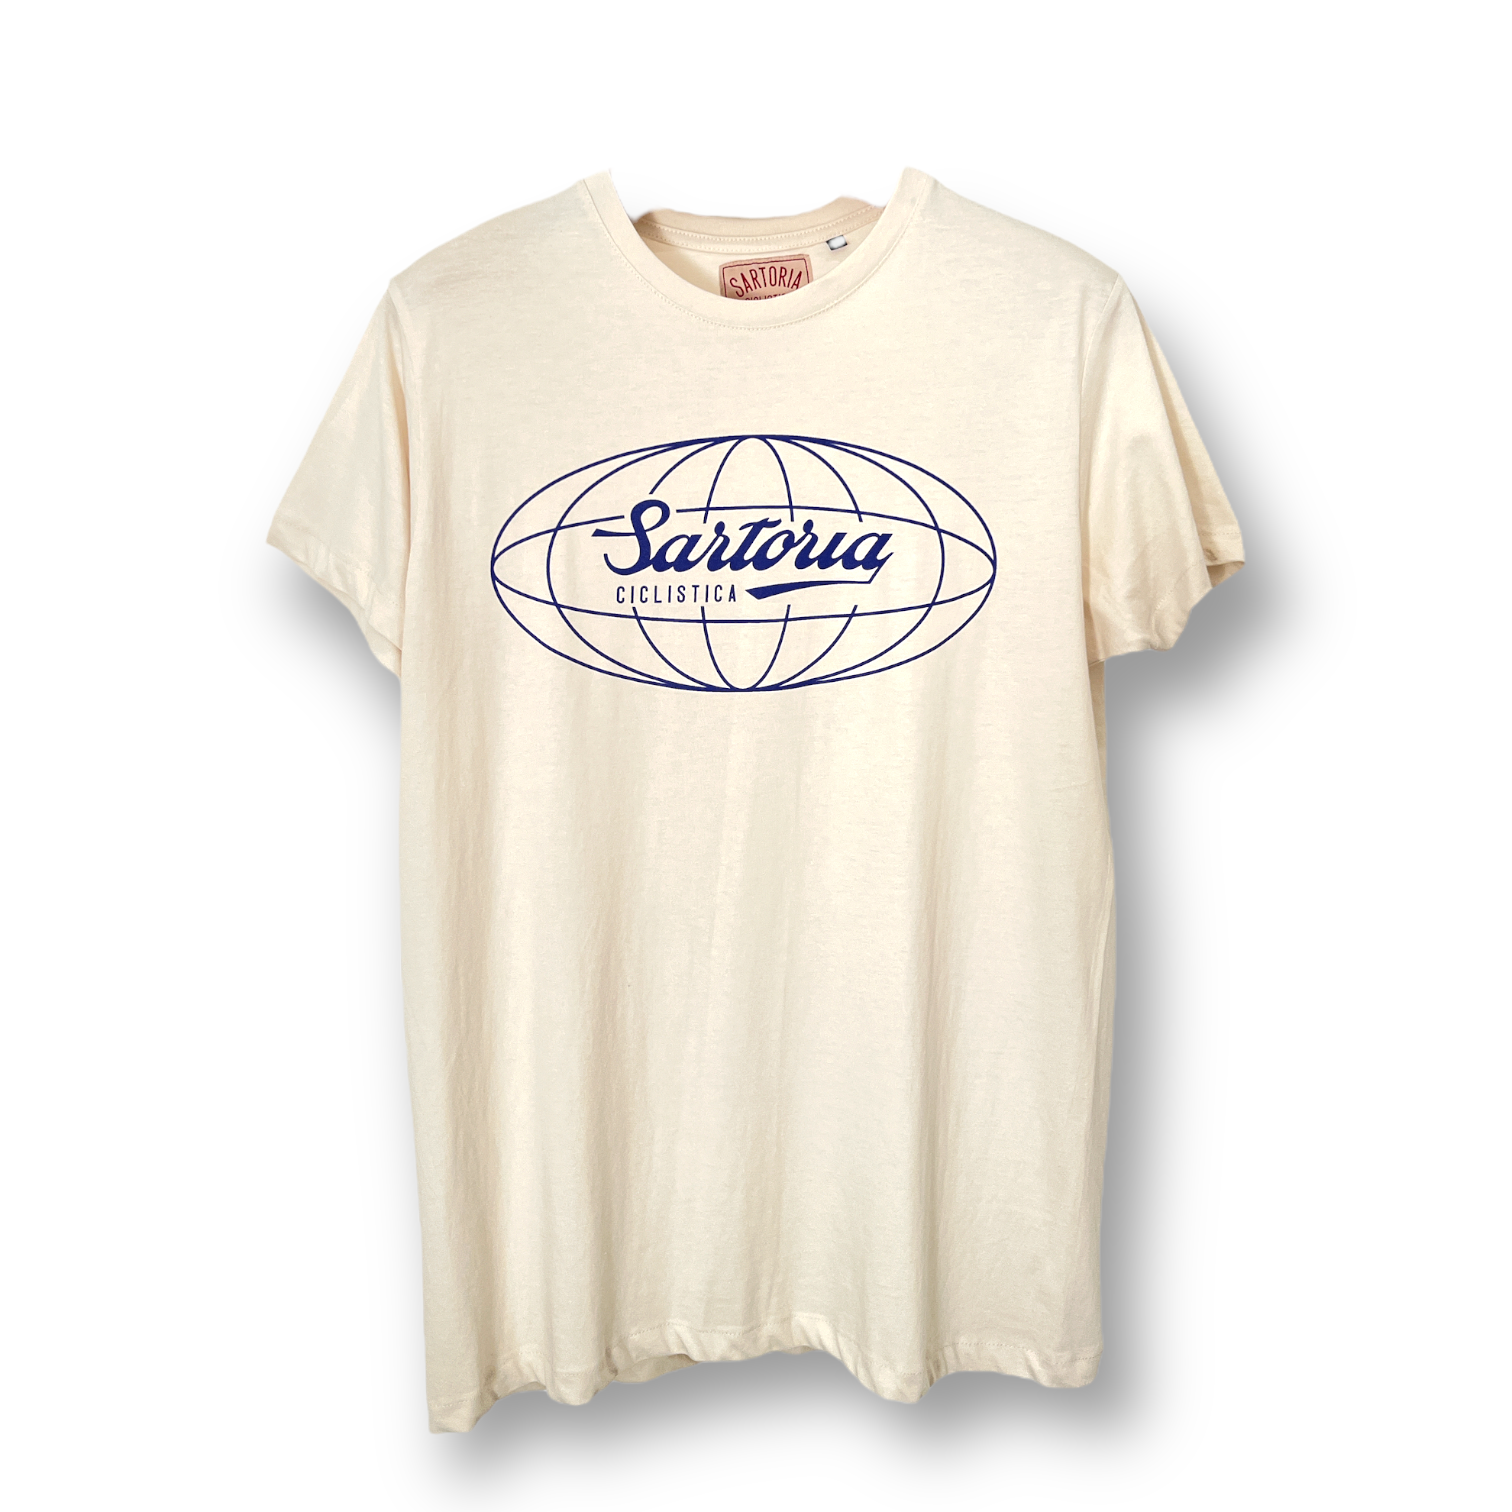 Organic Cotton Tshirt - Back in the 50' Sartoria Ciclistica - Unisex on